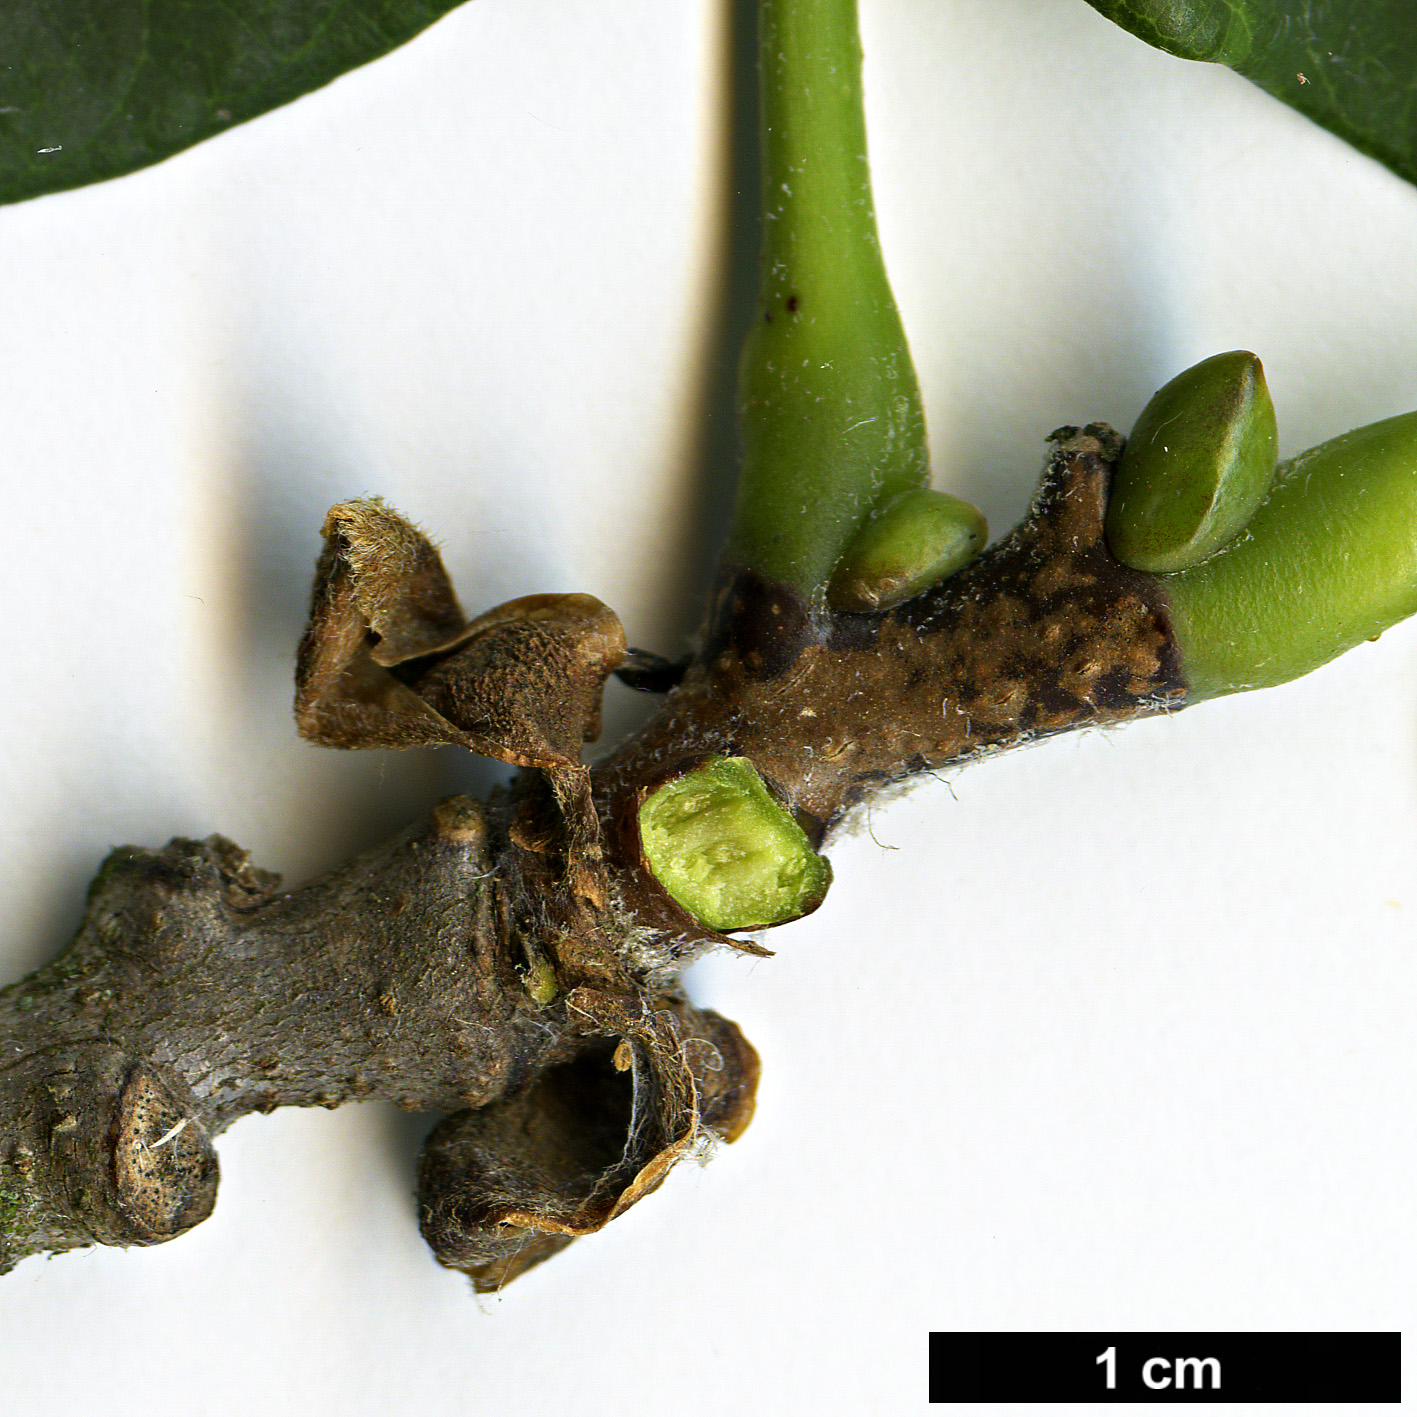 High resolution image: Family: Fabaceae - Genus: Maackia - Taxon: amurensis